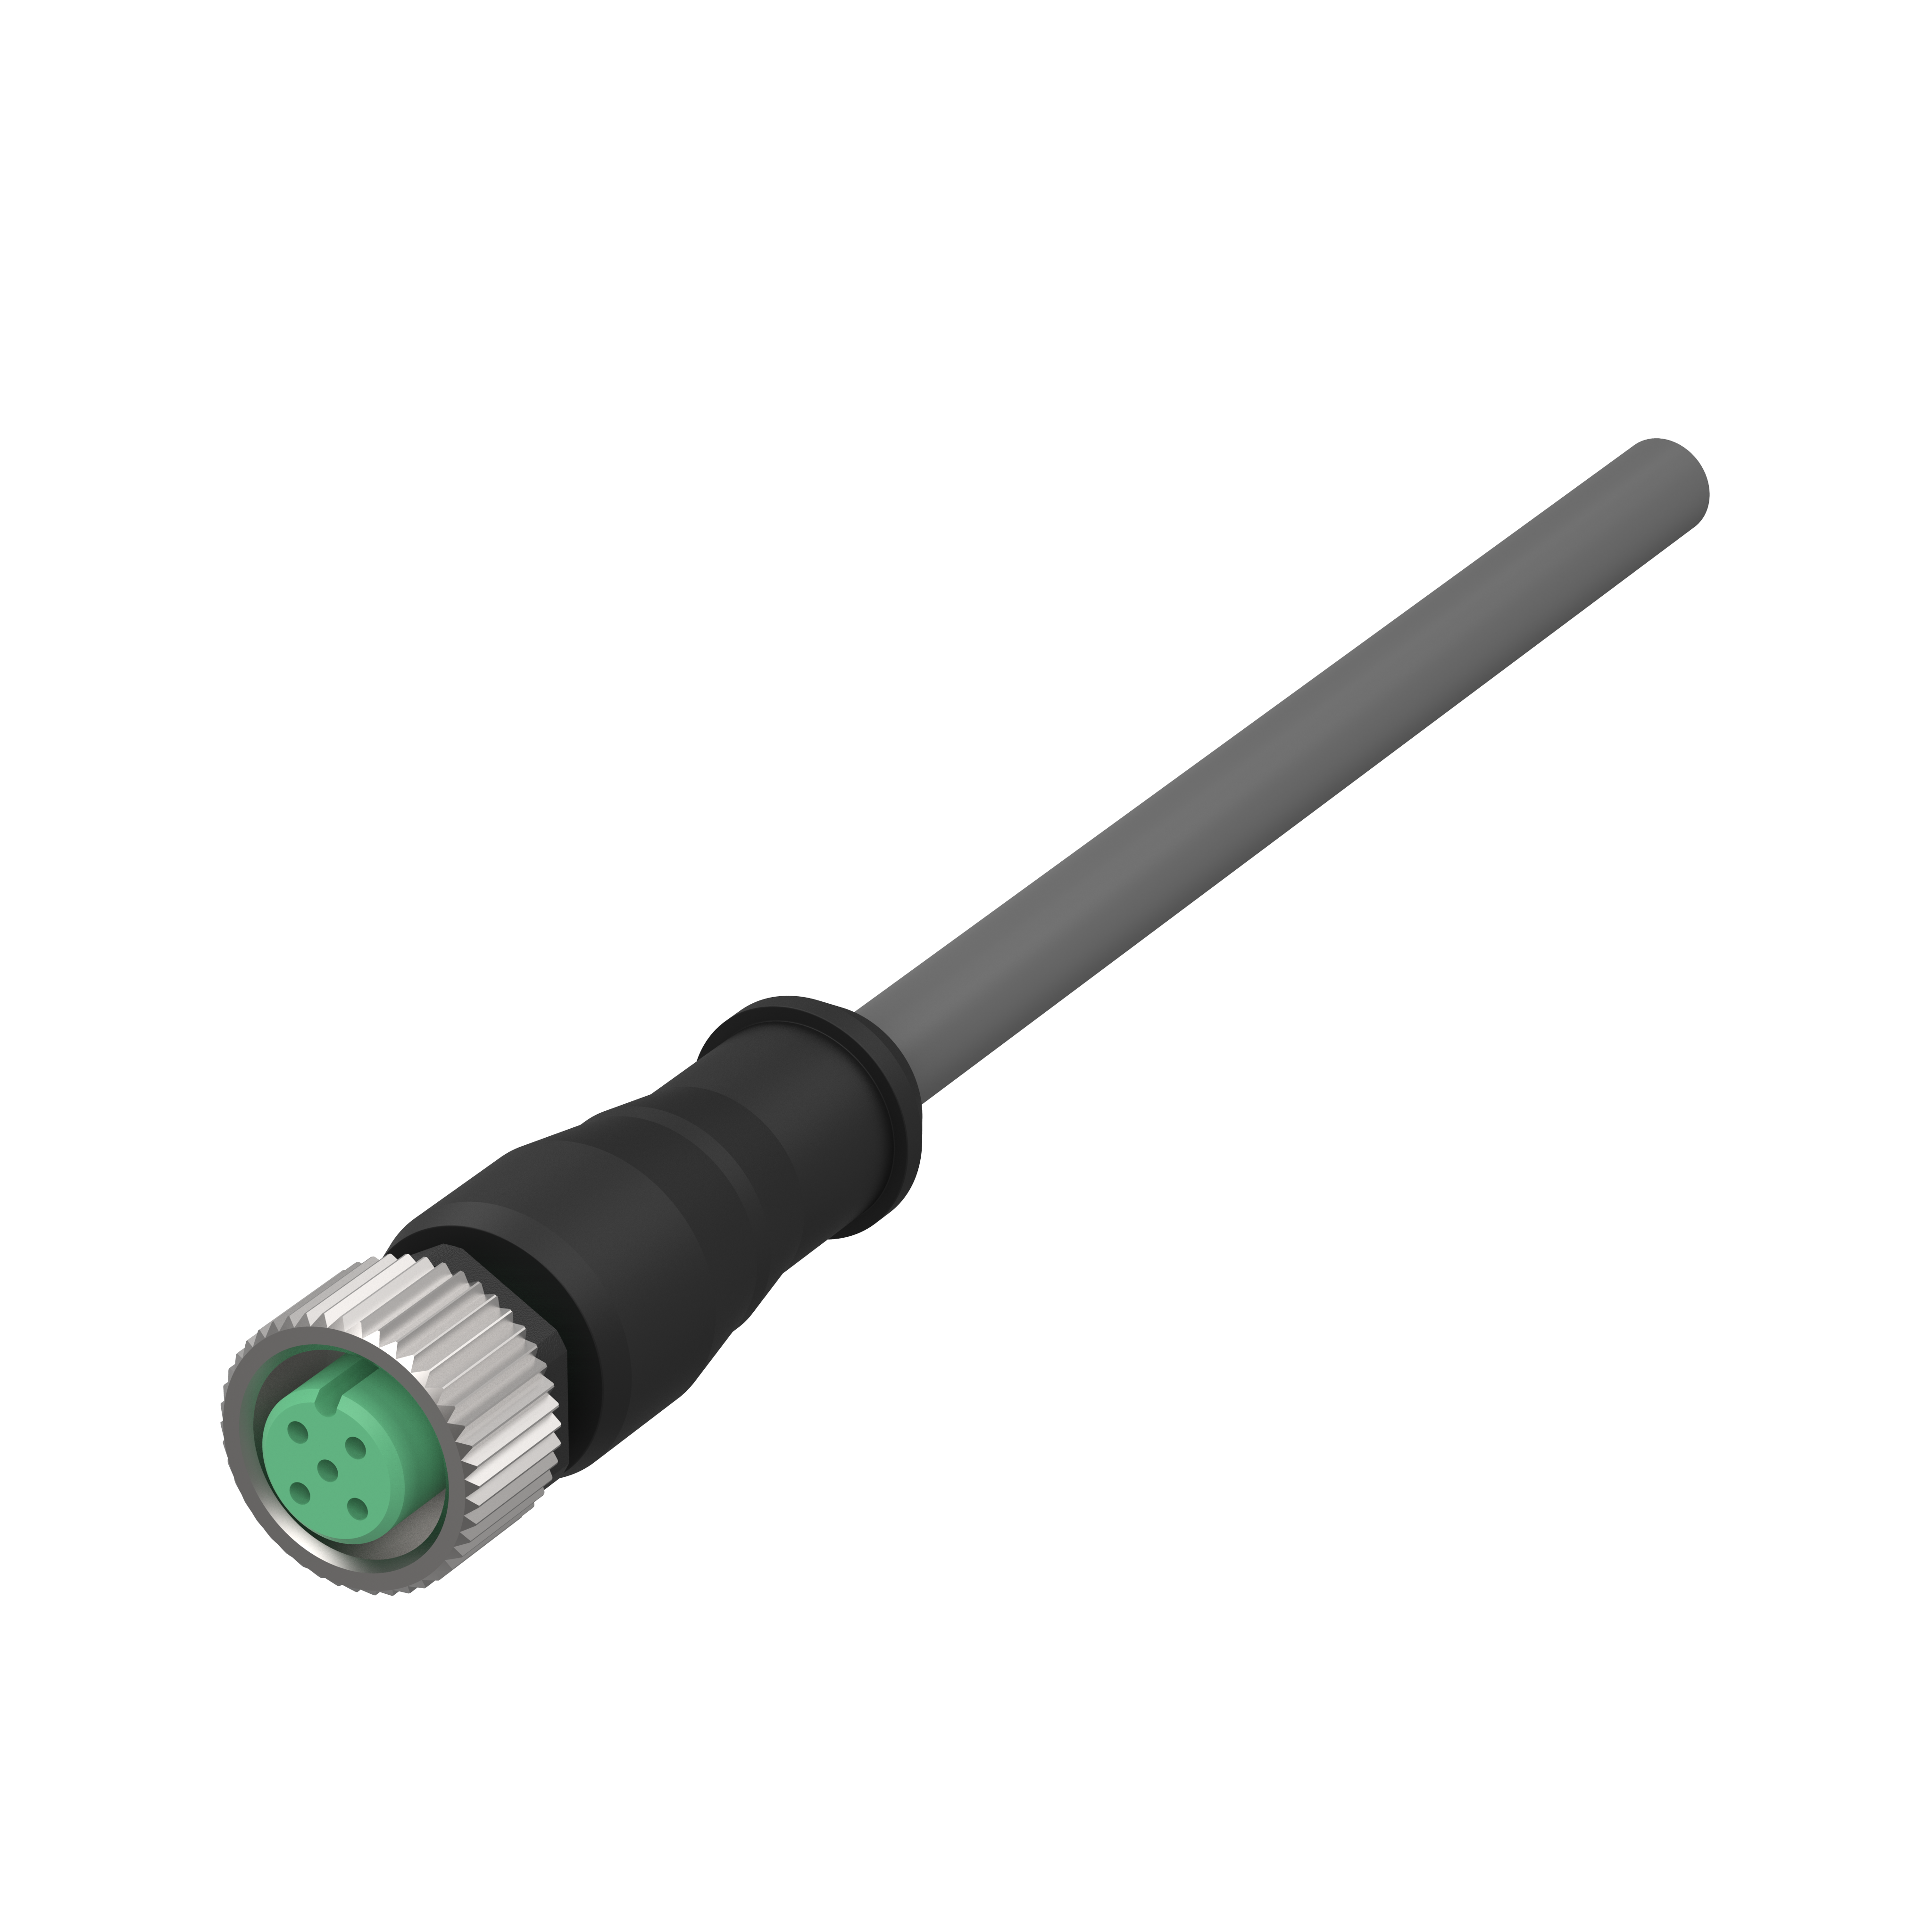 Round connector - K14H000 - 4x0,34mm², 10m, PVC, black